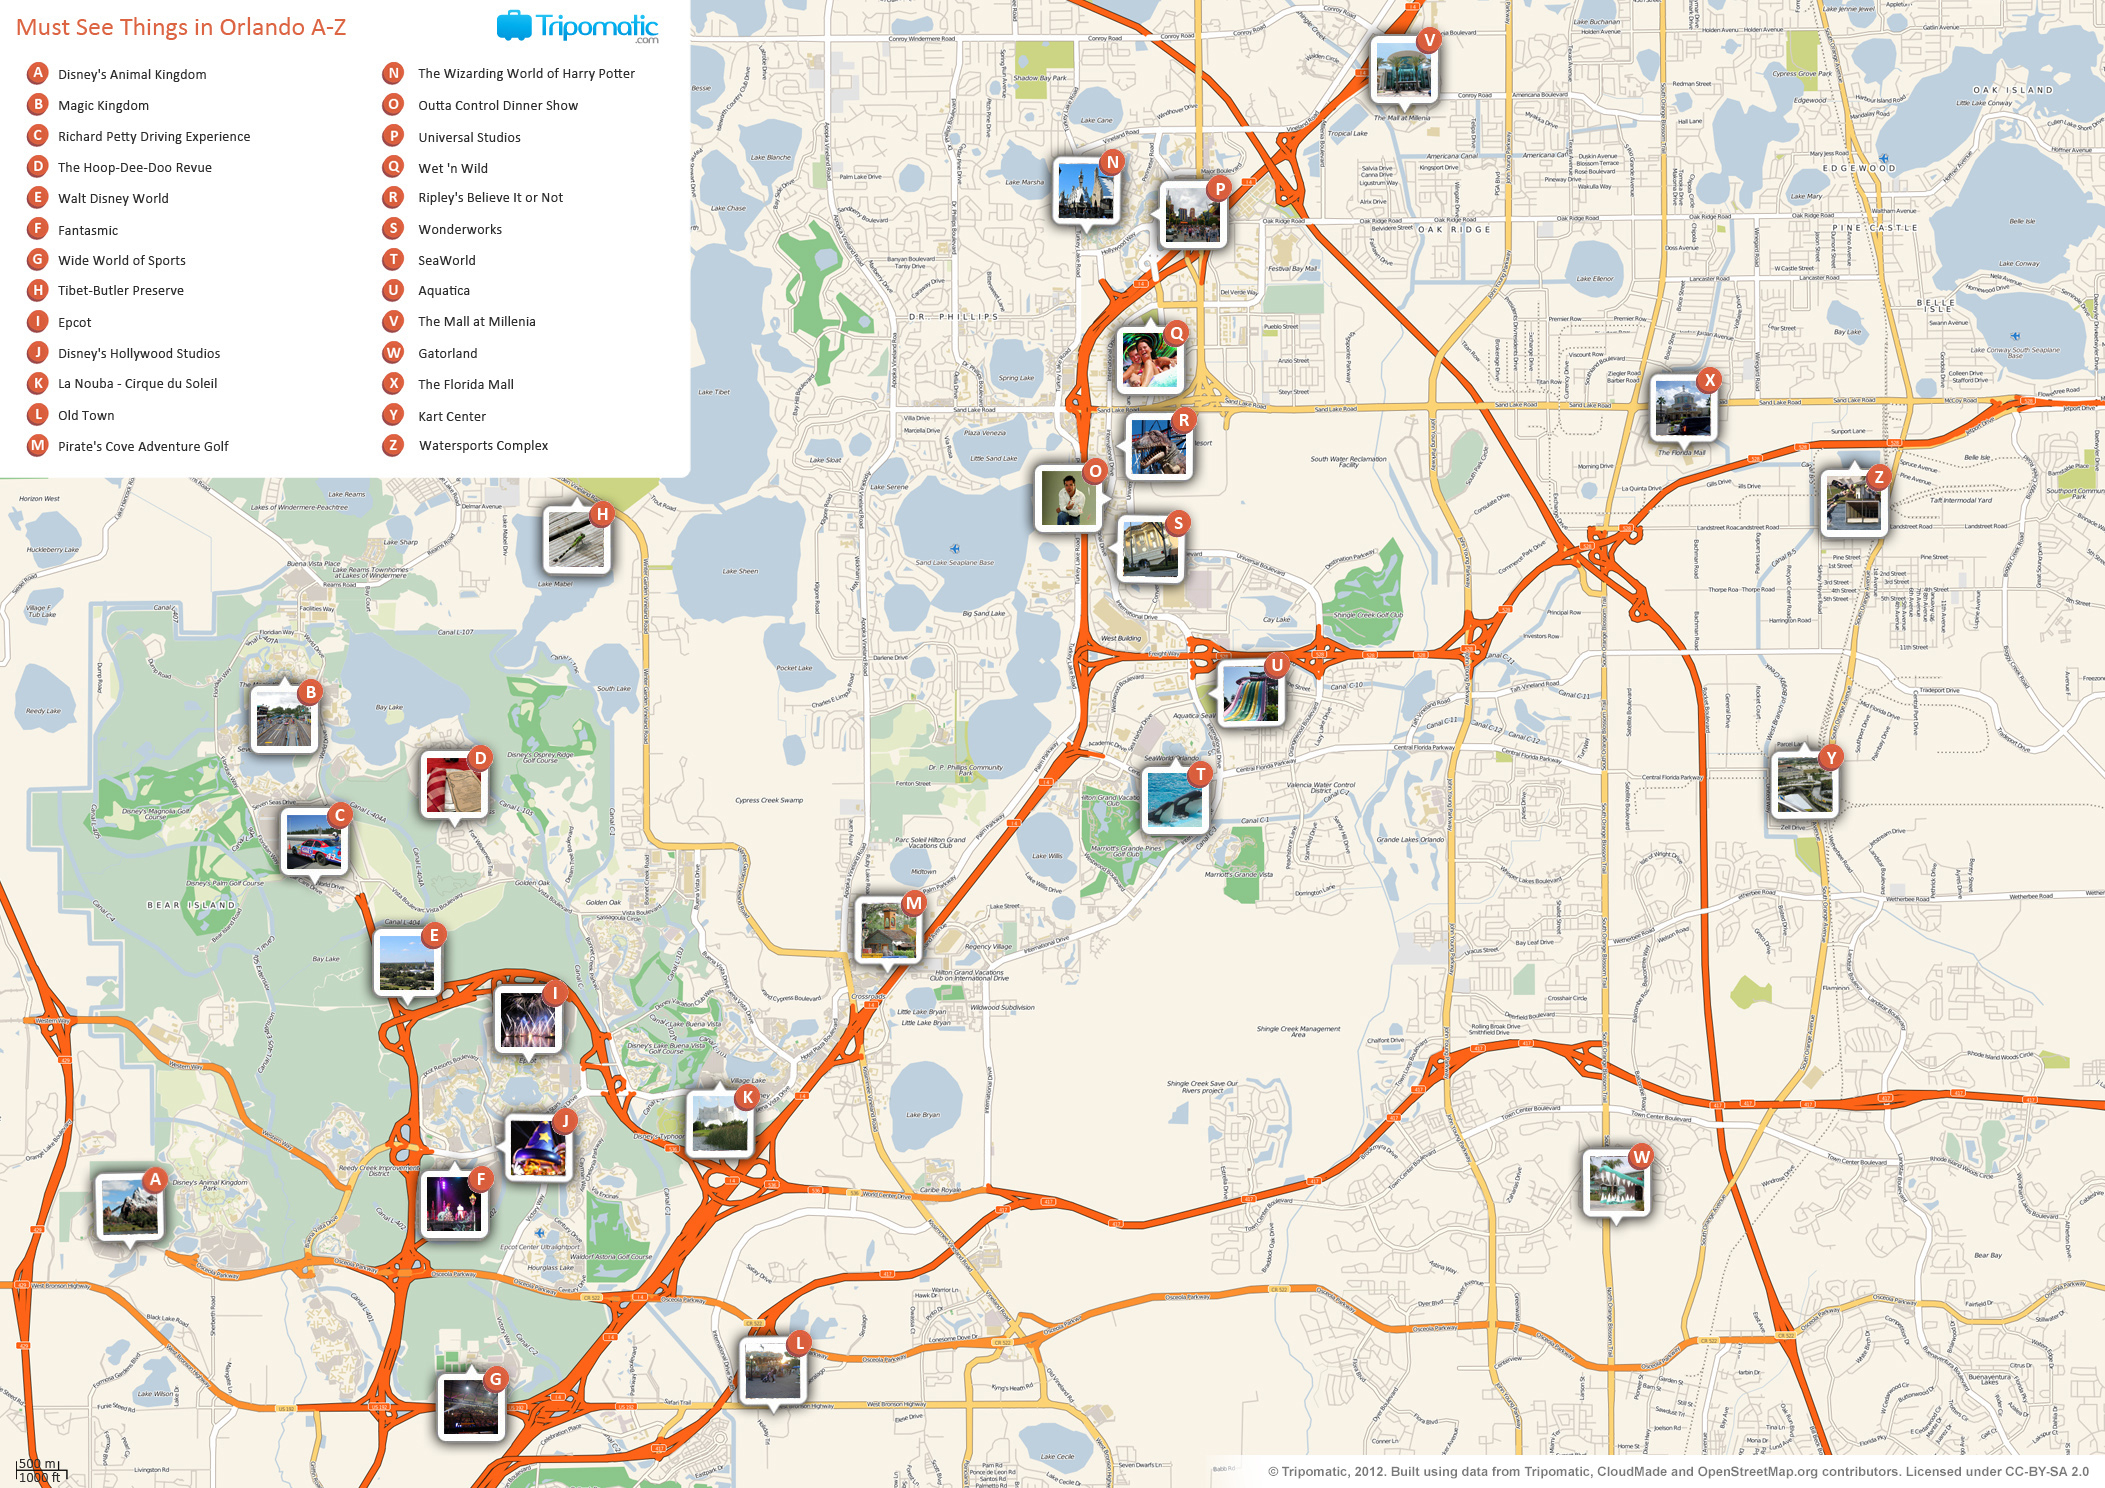 File:orlando Printable Tourist Attractions Map - Wikimedia Commons - Tourist Map Of Orlando Florida